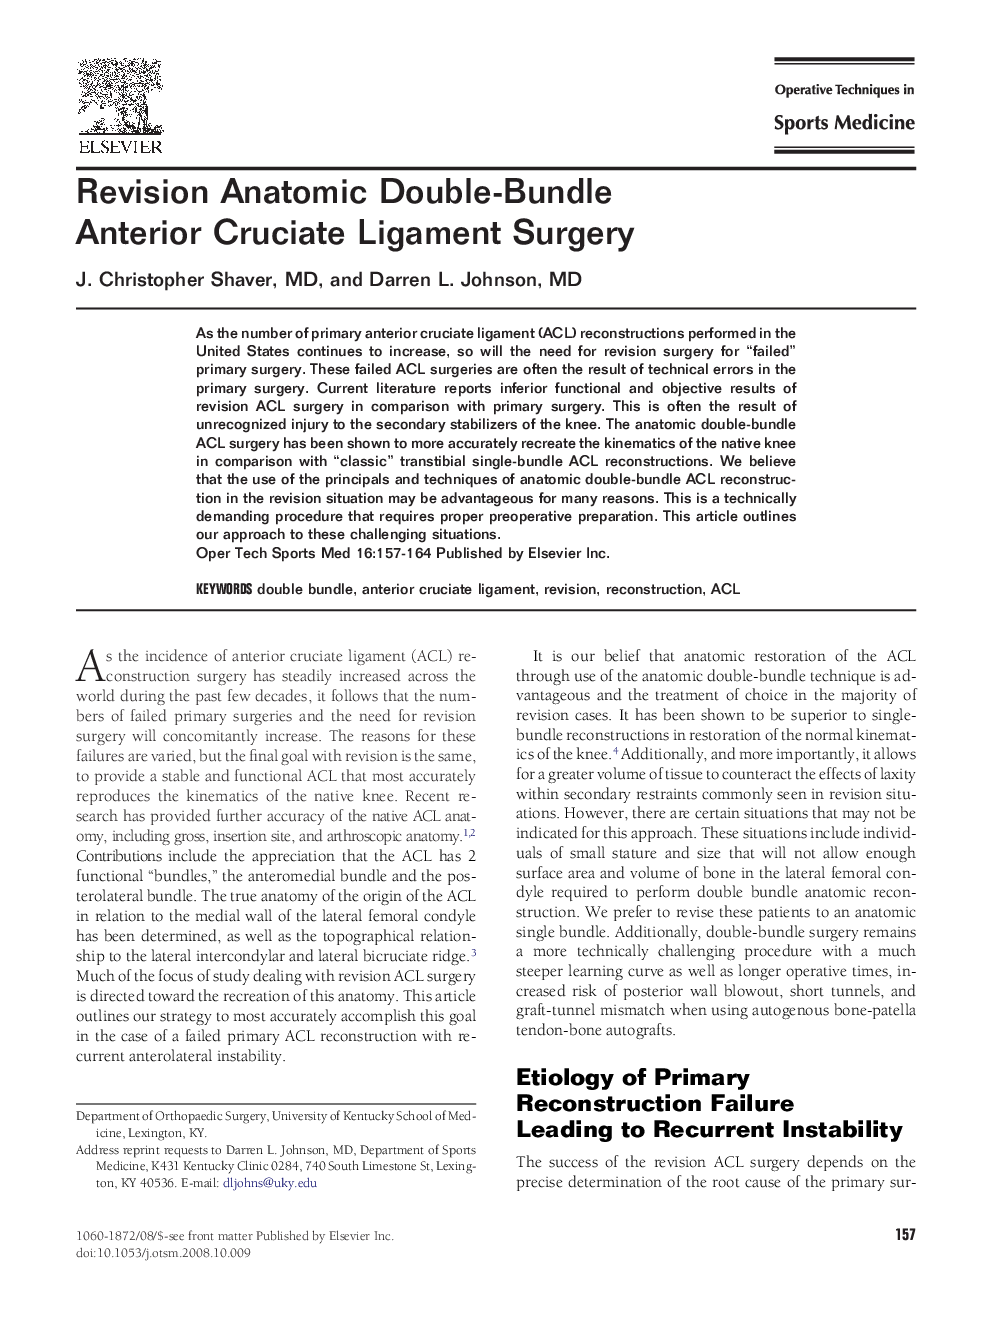 Revision Anatomic Double-Bundle Anterior Cruciate Ligament Surgery